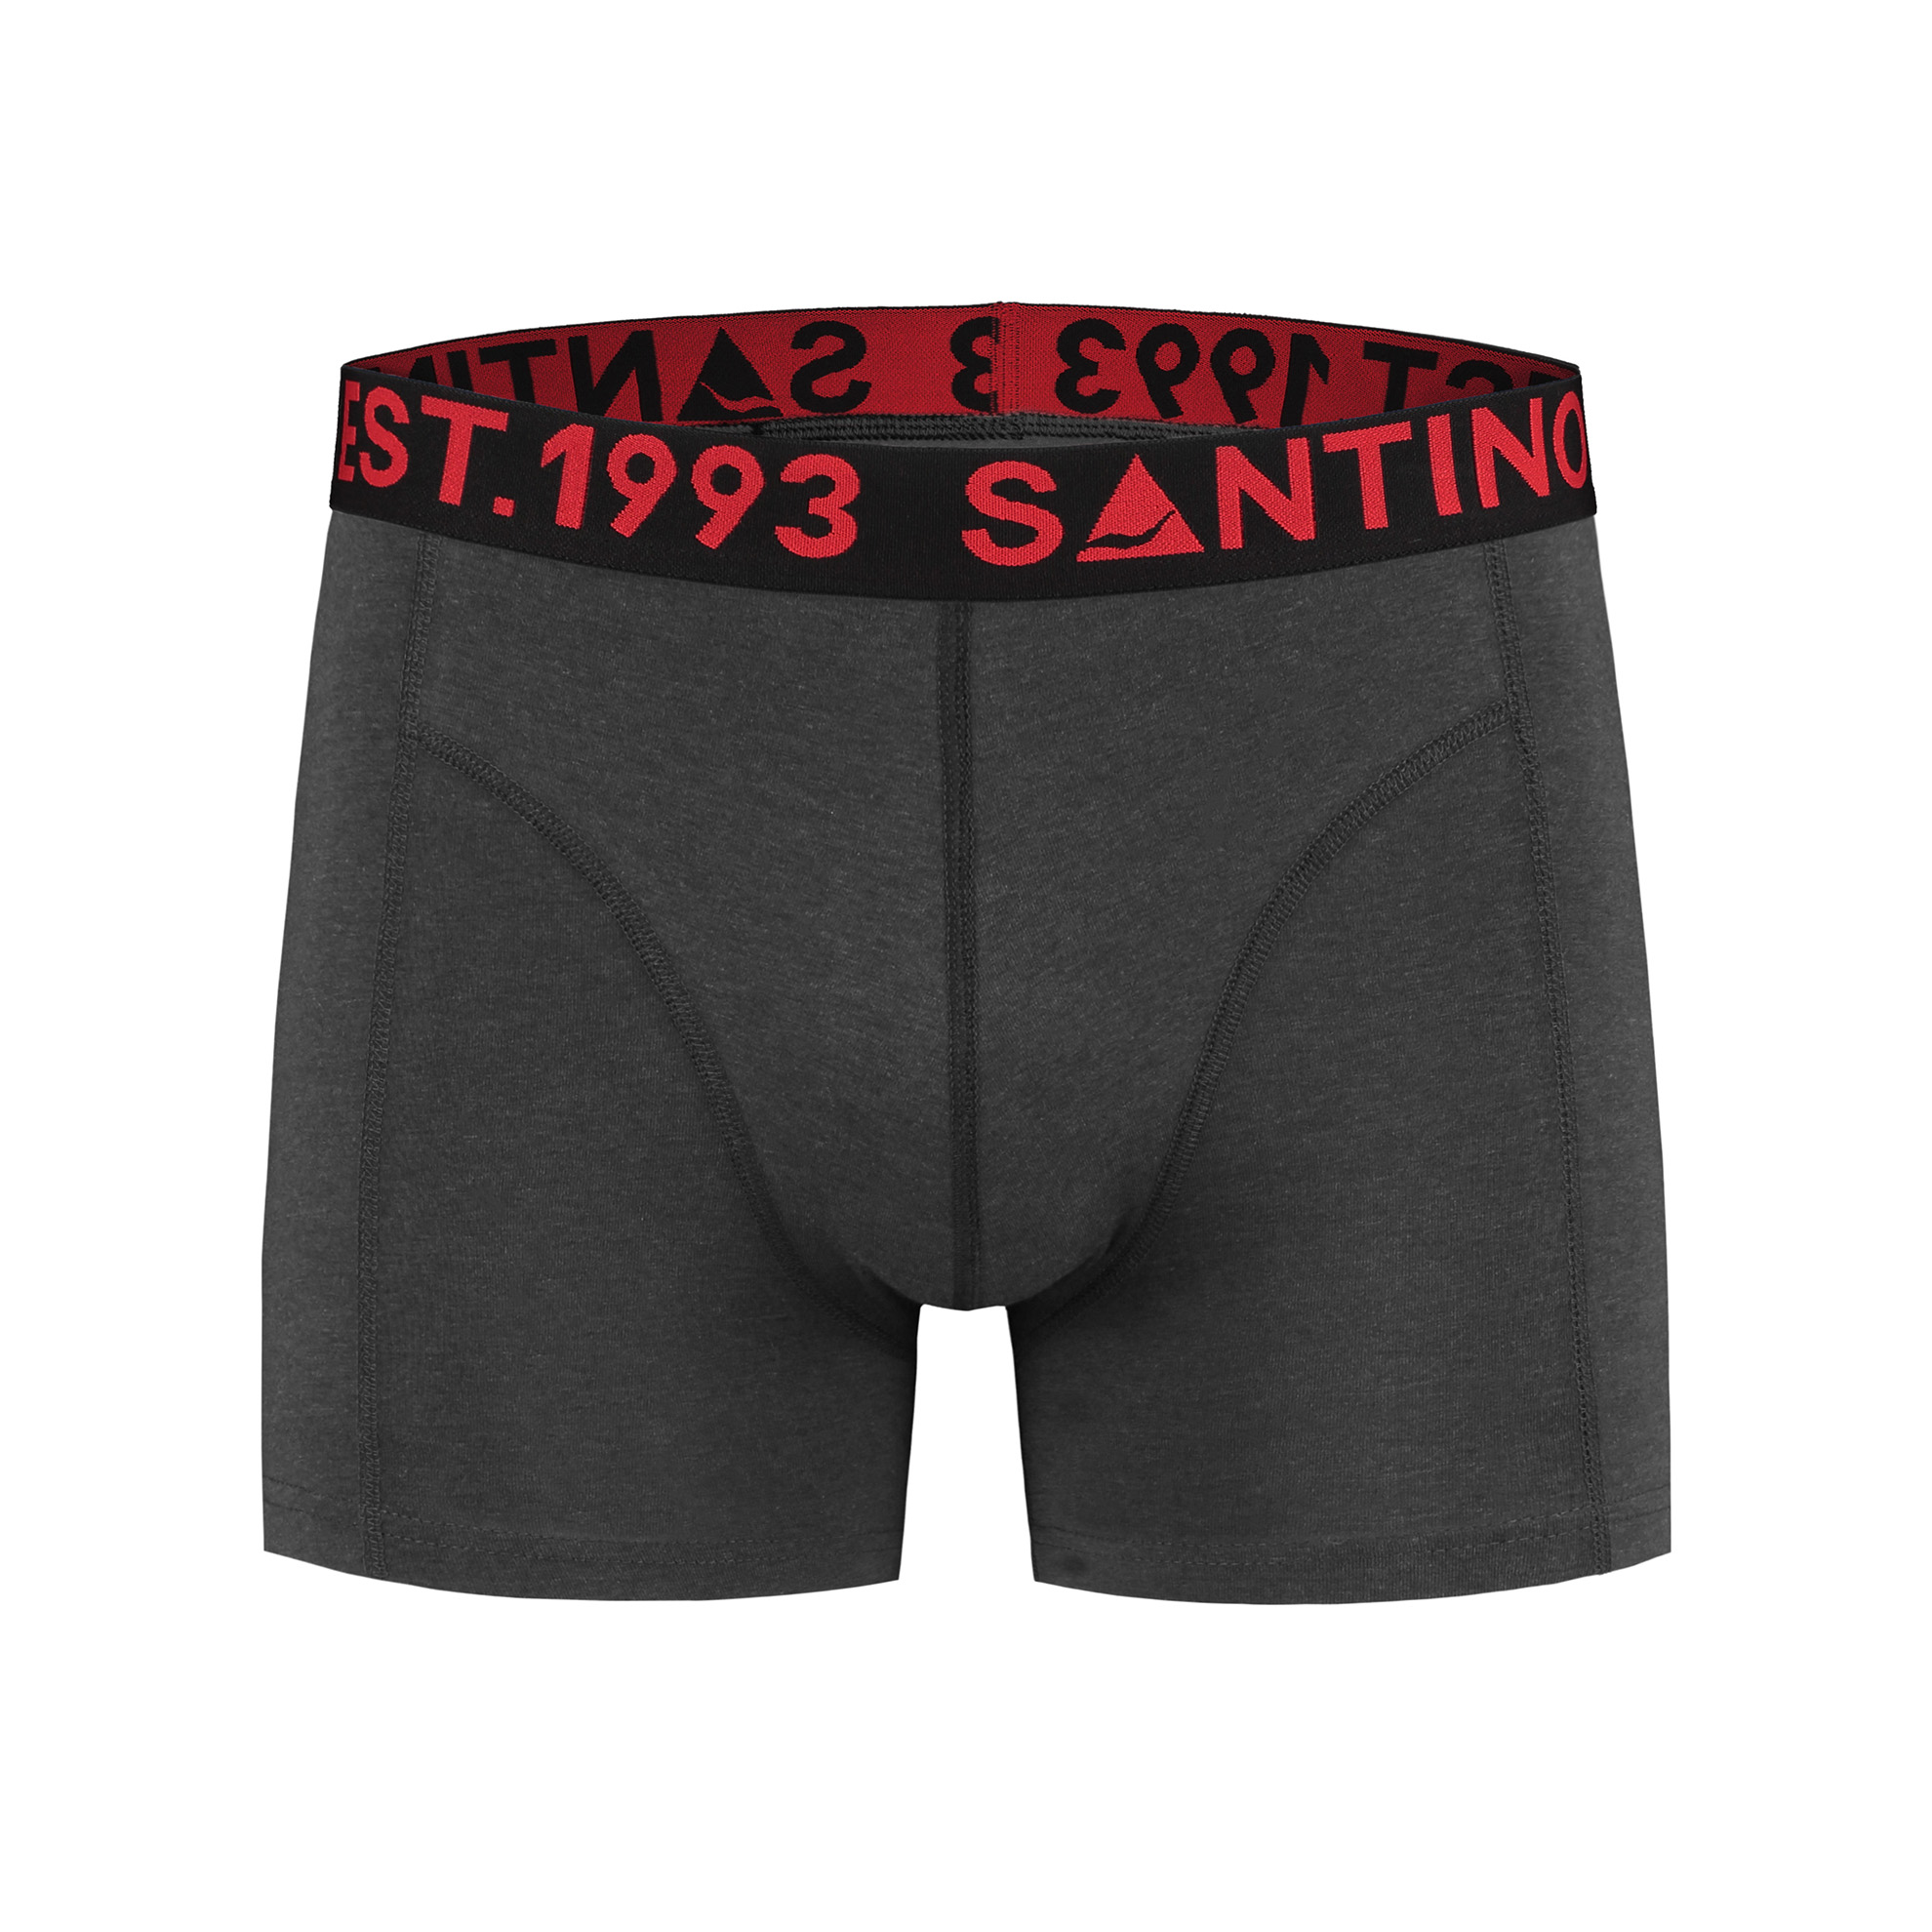 Santino Boxershort Boxer Graphit Gr. XL